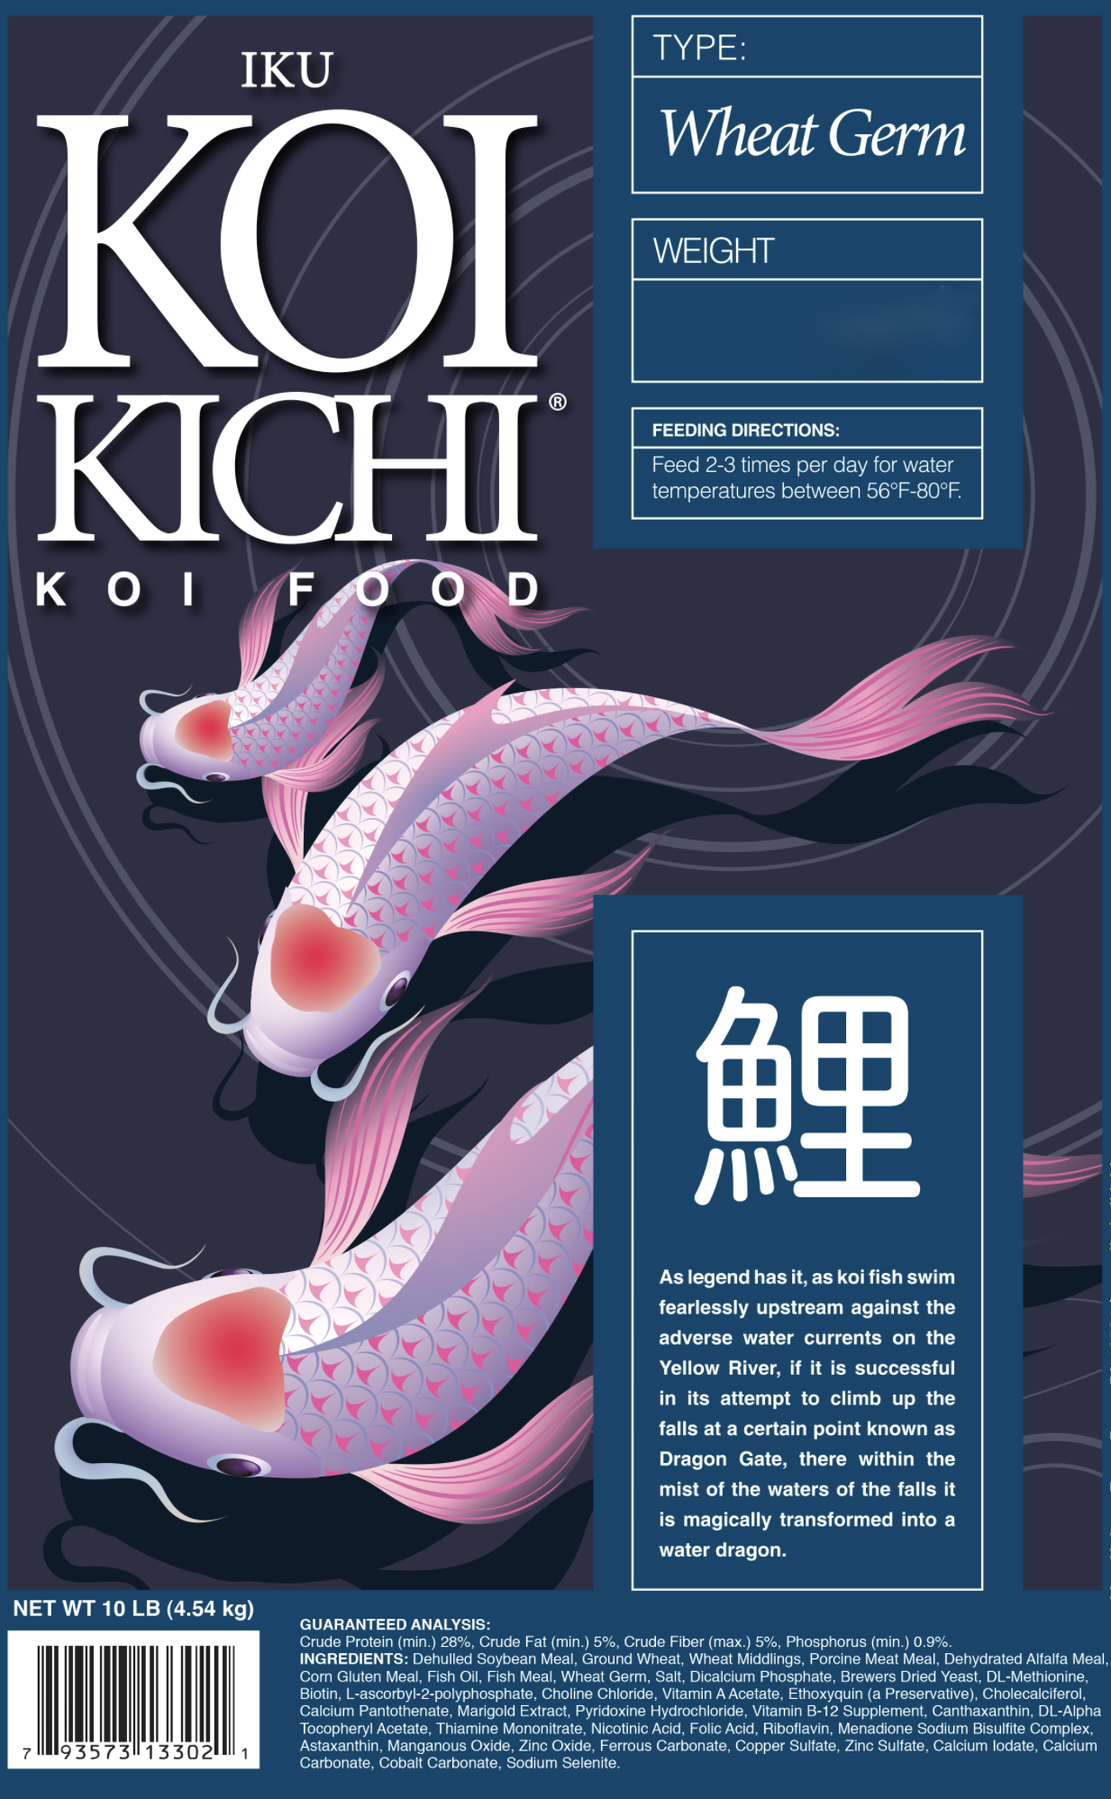 Iku Koi Kichi Wheat Germ Koi Fish Food - 20 lbs.